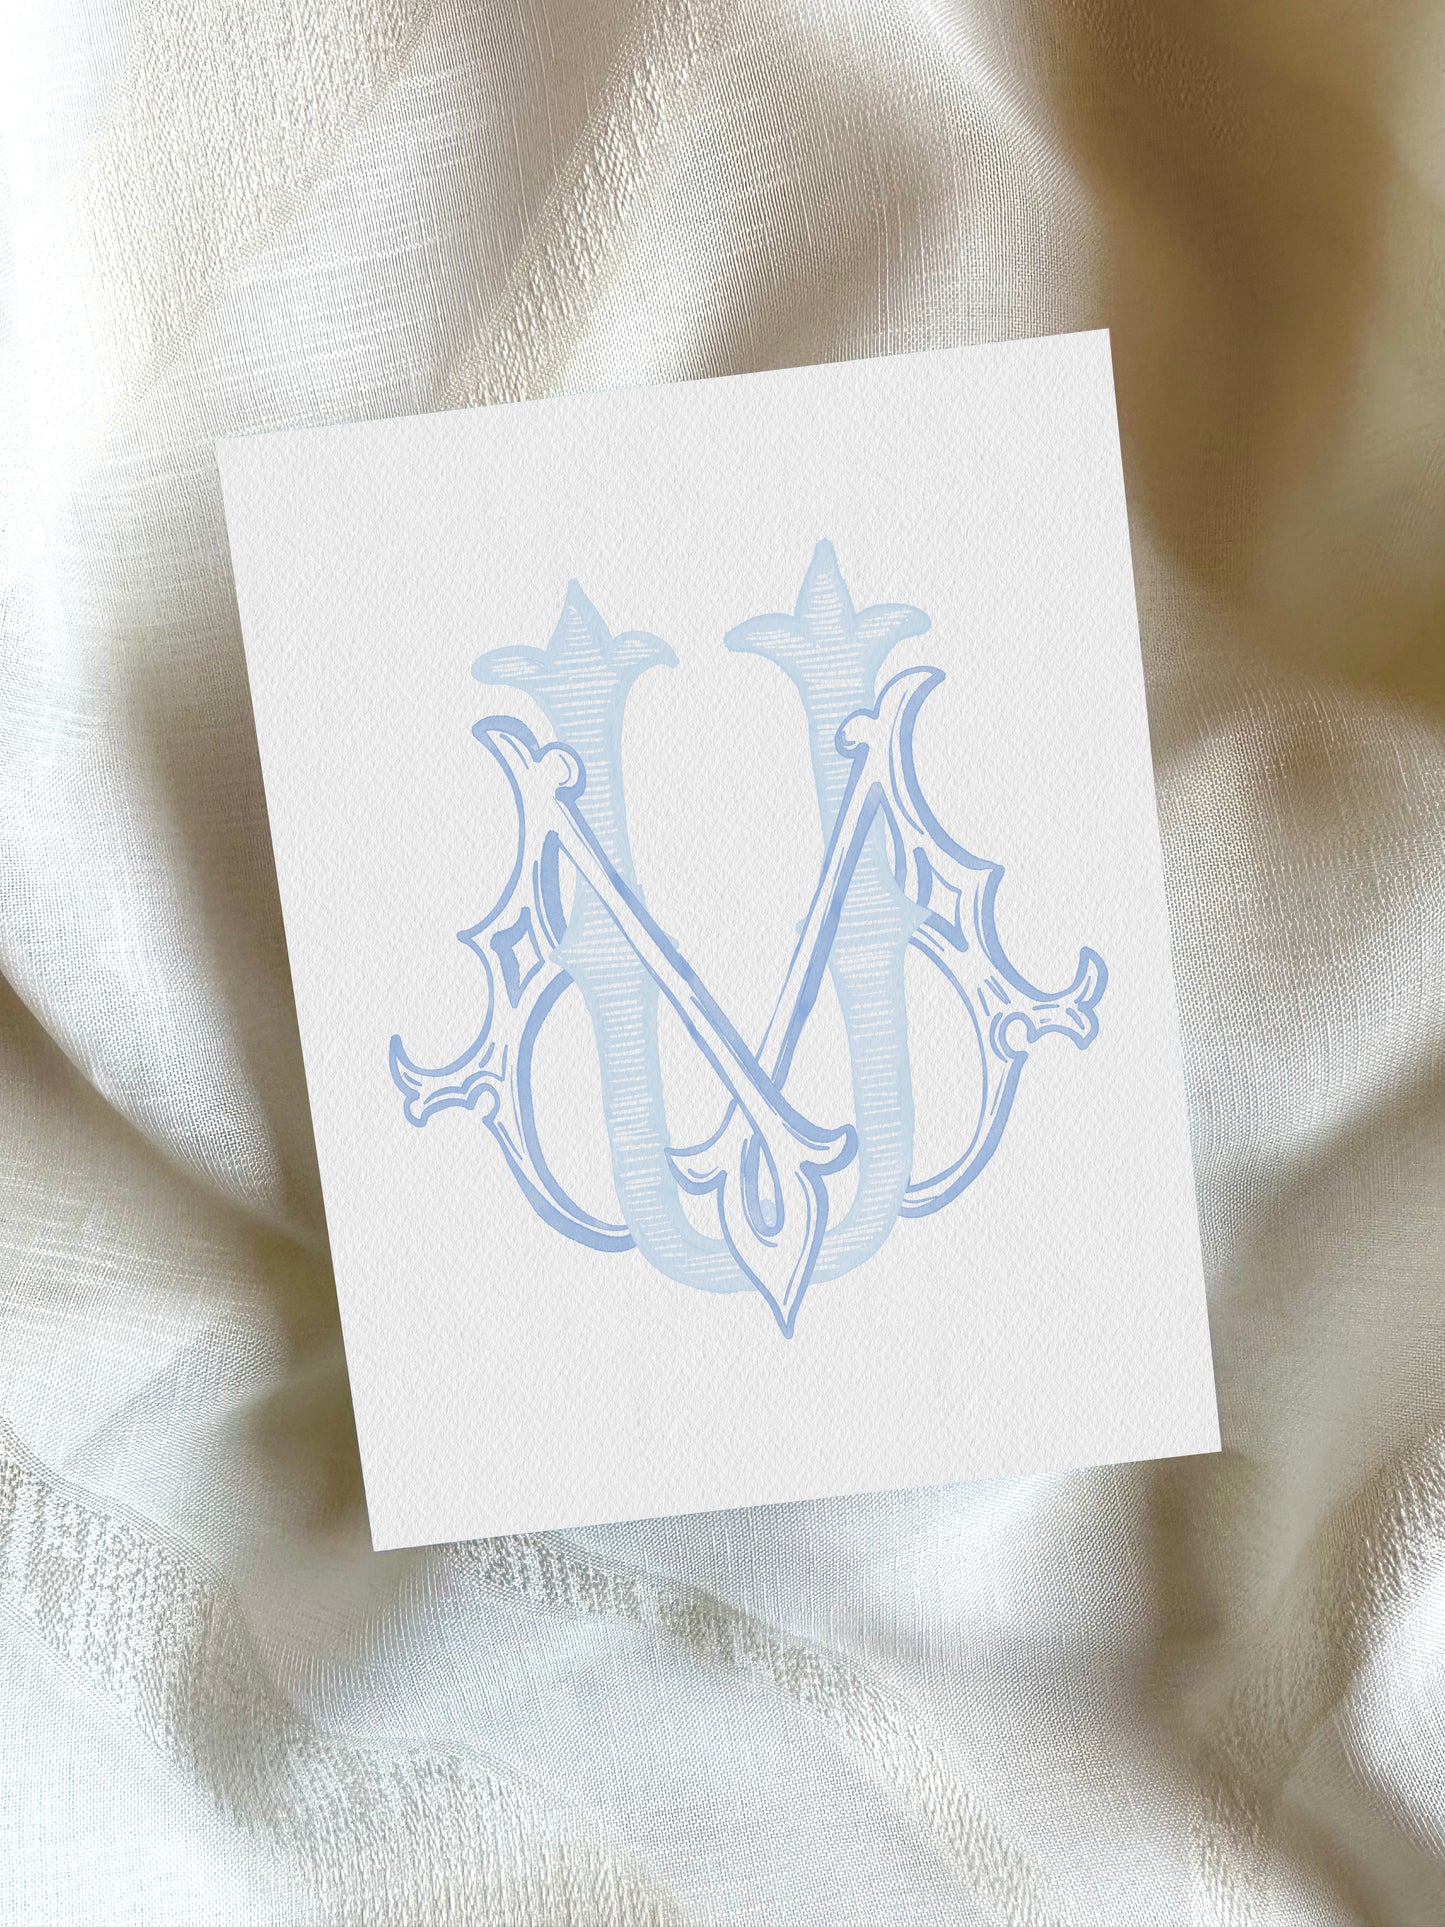 2 Letter Monogram with Letters MU UM | Digital Download - Wedding Monogram SVG, Personal Logo, Wedding Logo for Wedding Invitations The Wedding Crest Lab